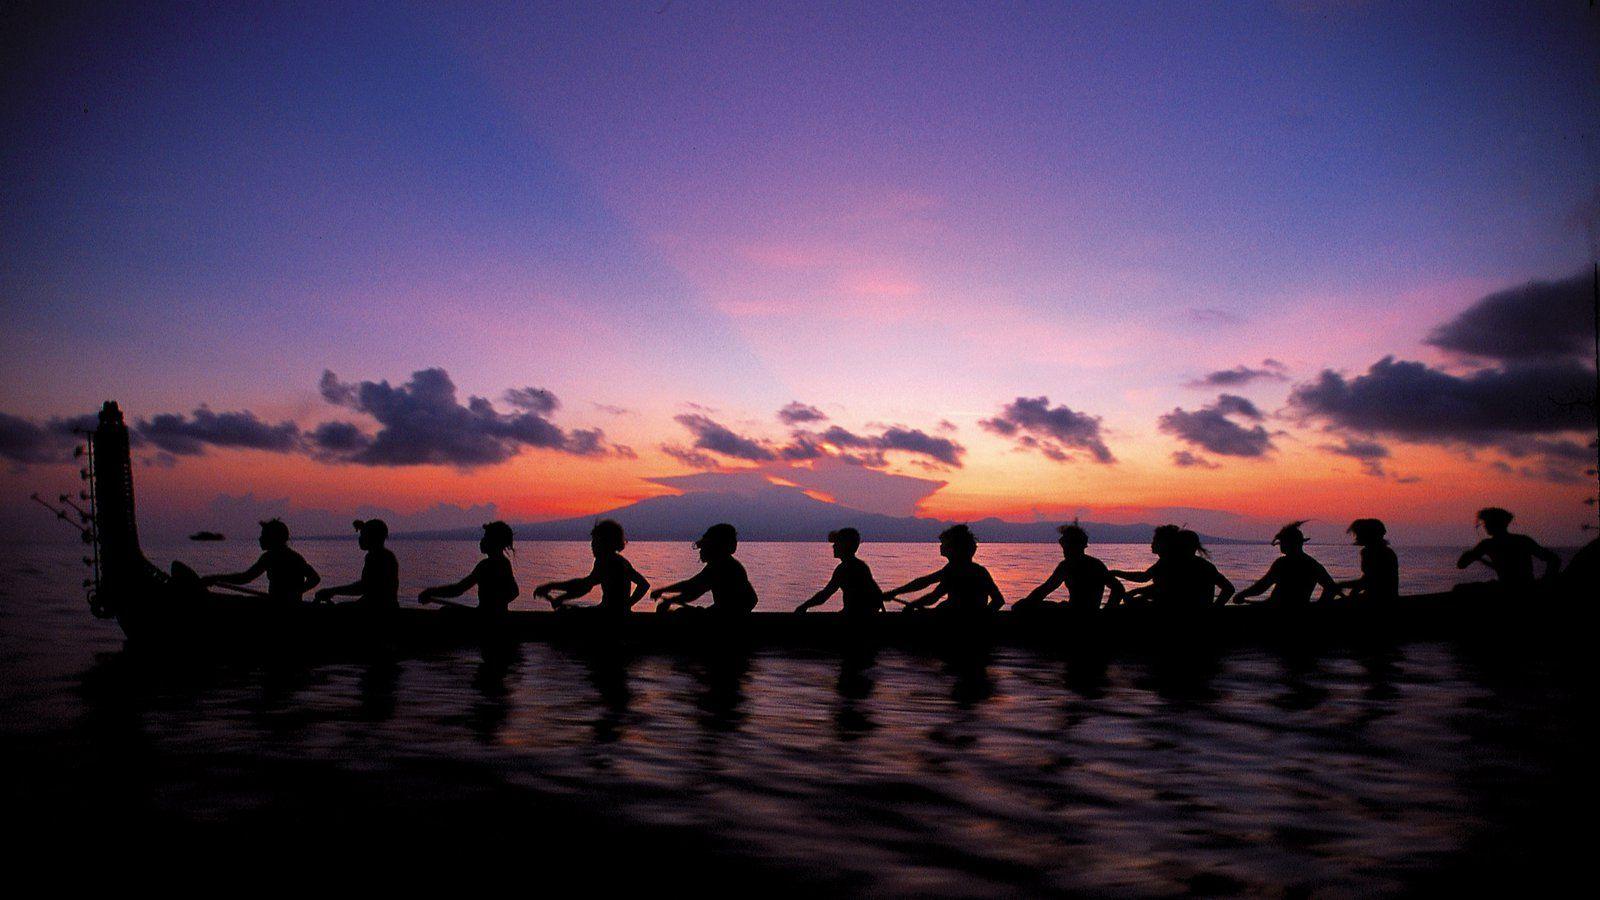 Solomon Islands Picture: View Photo & Image of Solomon Islands